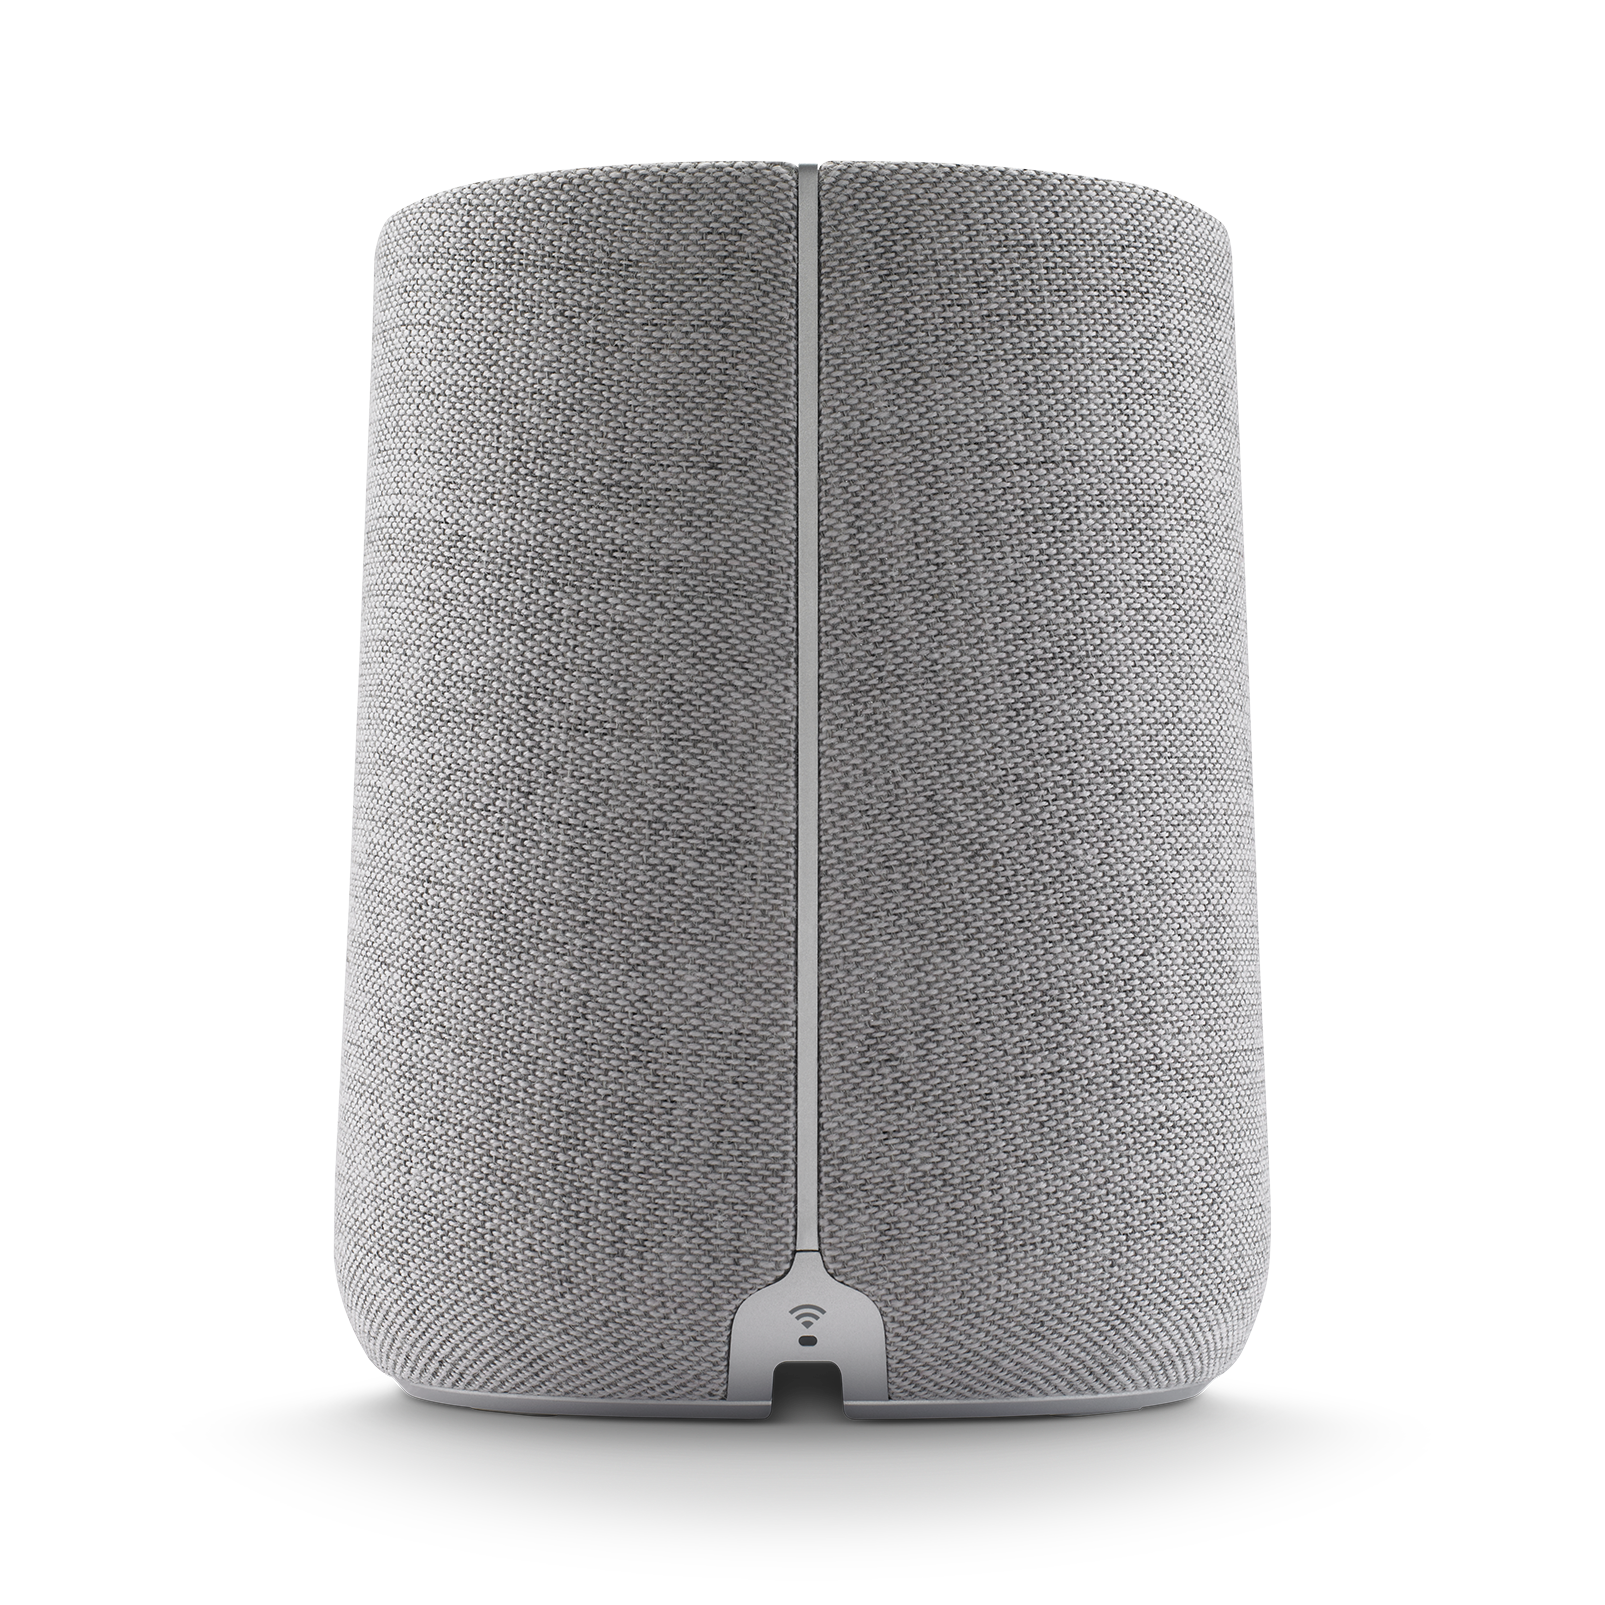 Harman Kardon Citation One MKII - Grey - All-in-one smart speaker with room-filling sound - Back